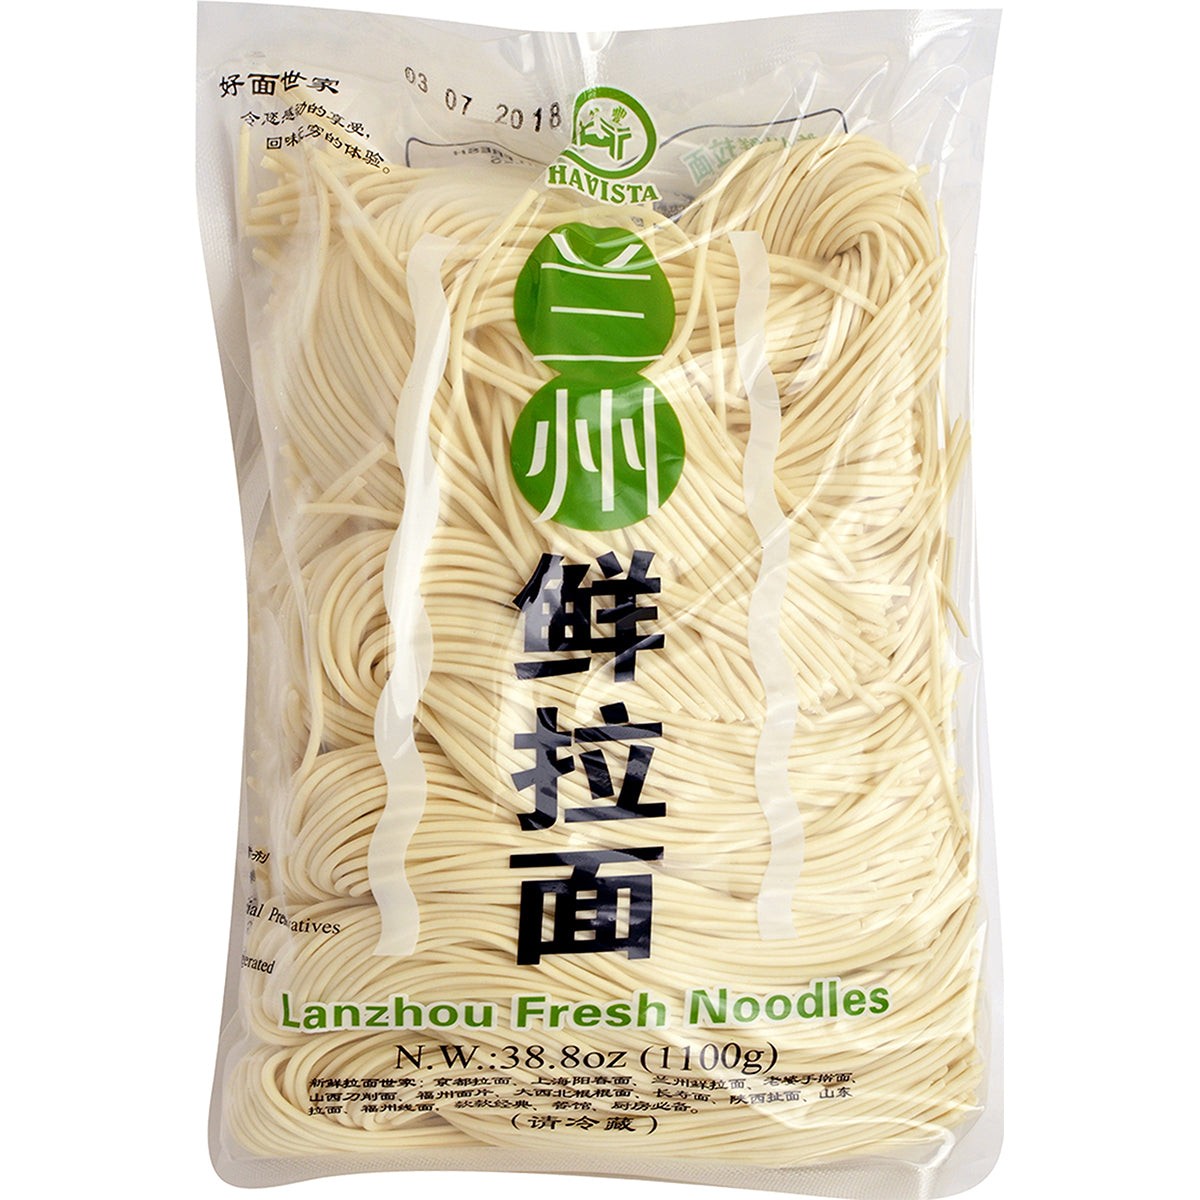 havista-lanzhou-fresh-noodles